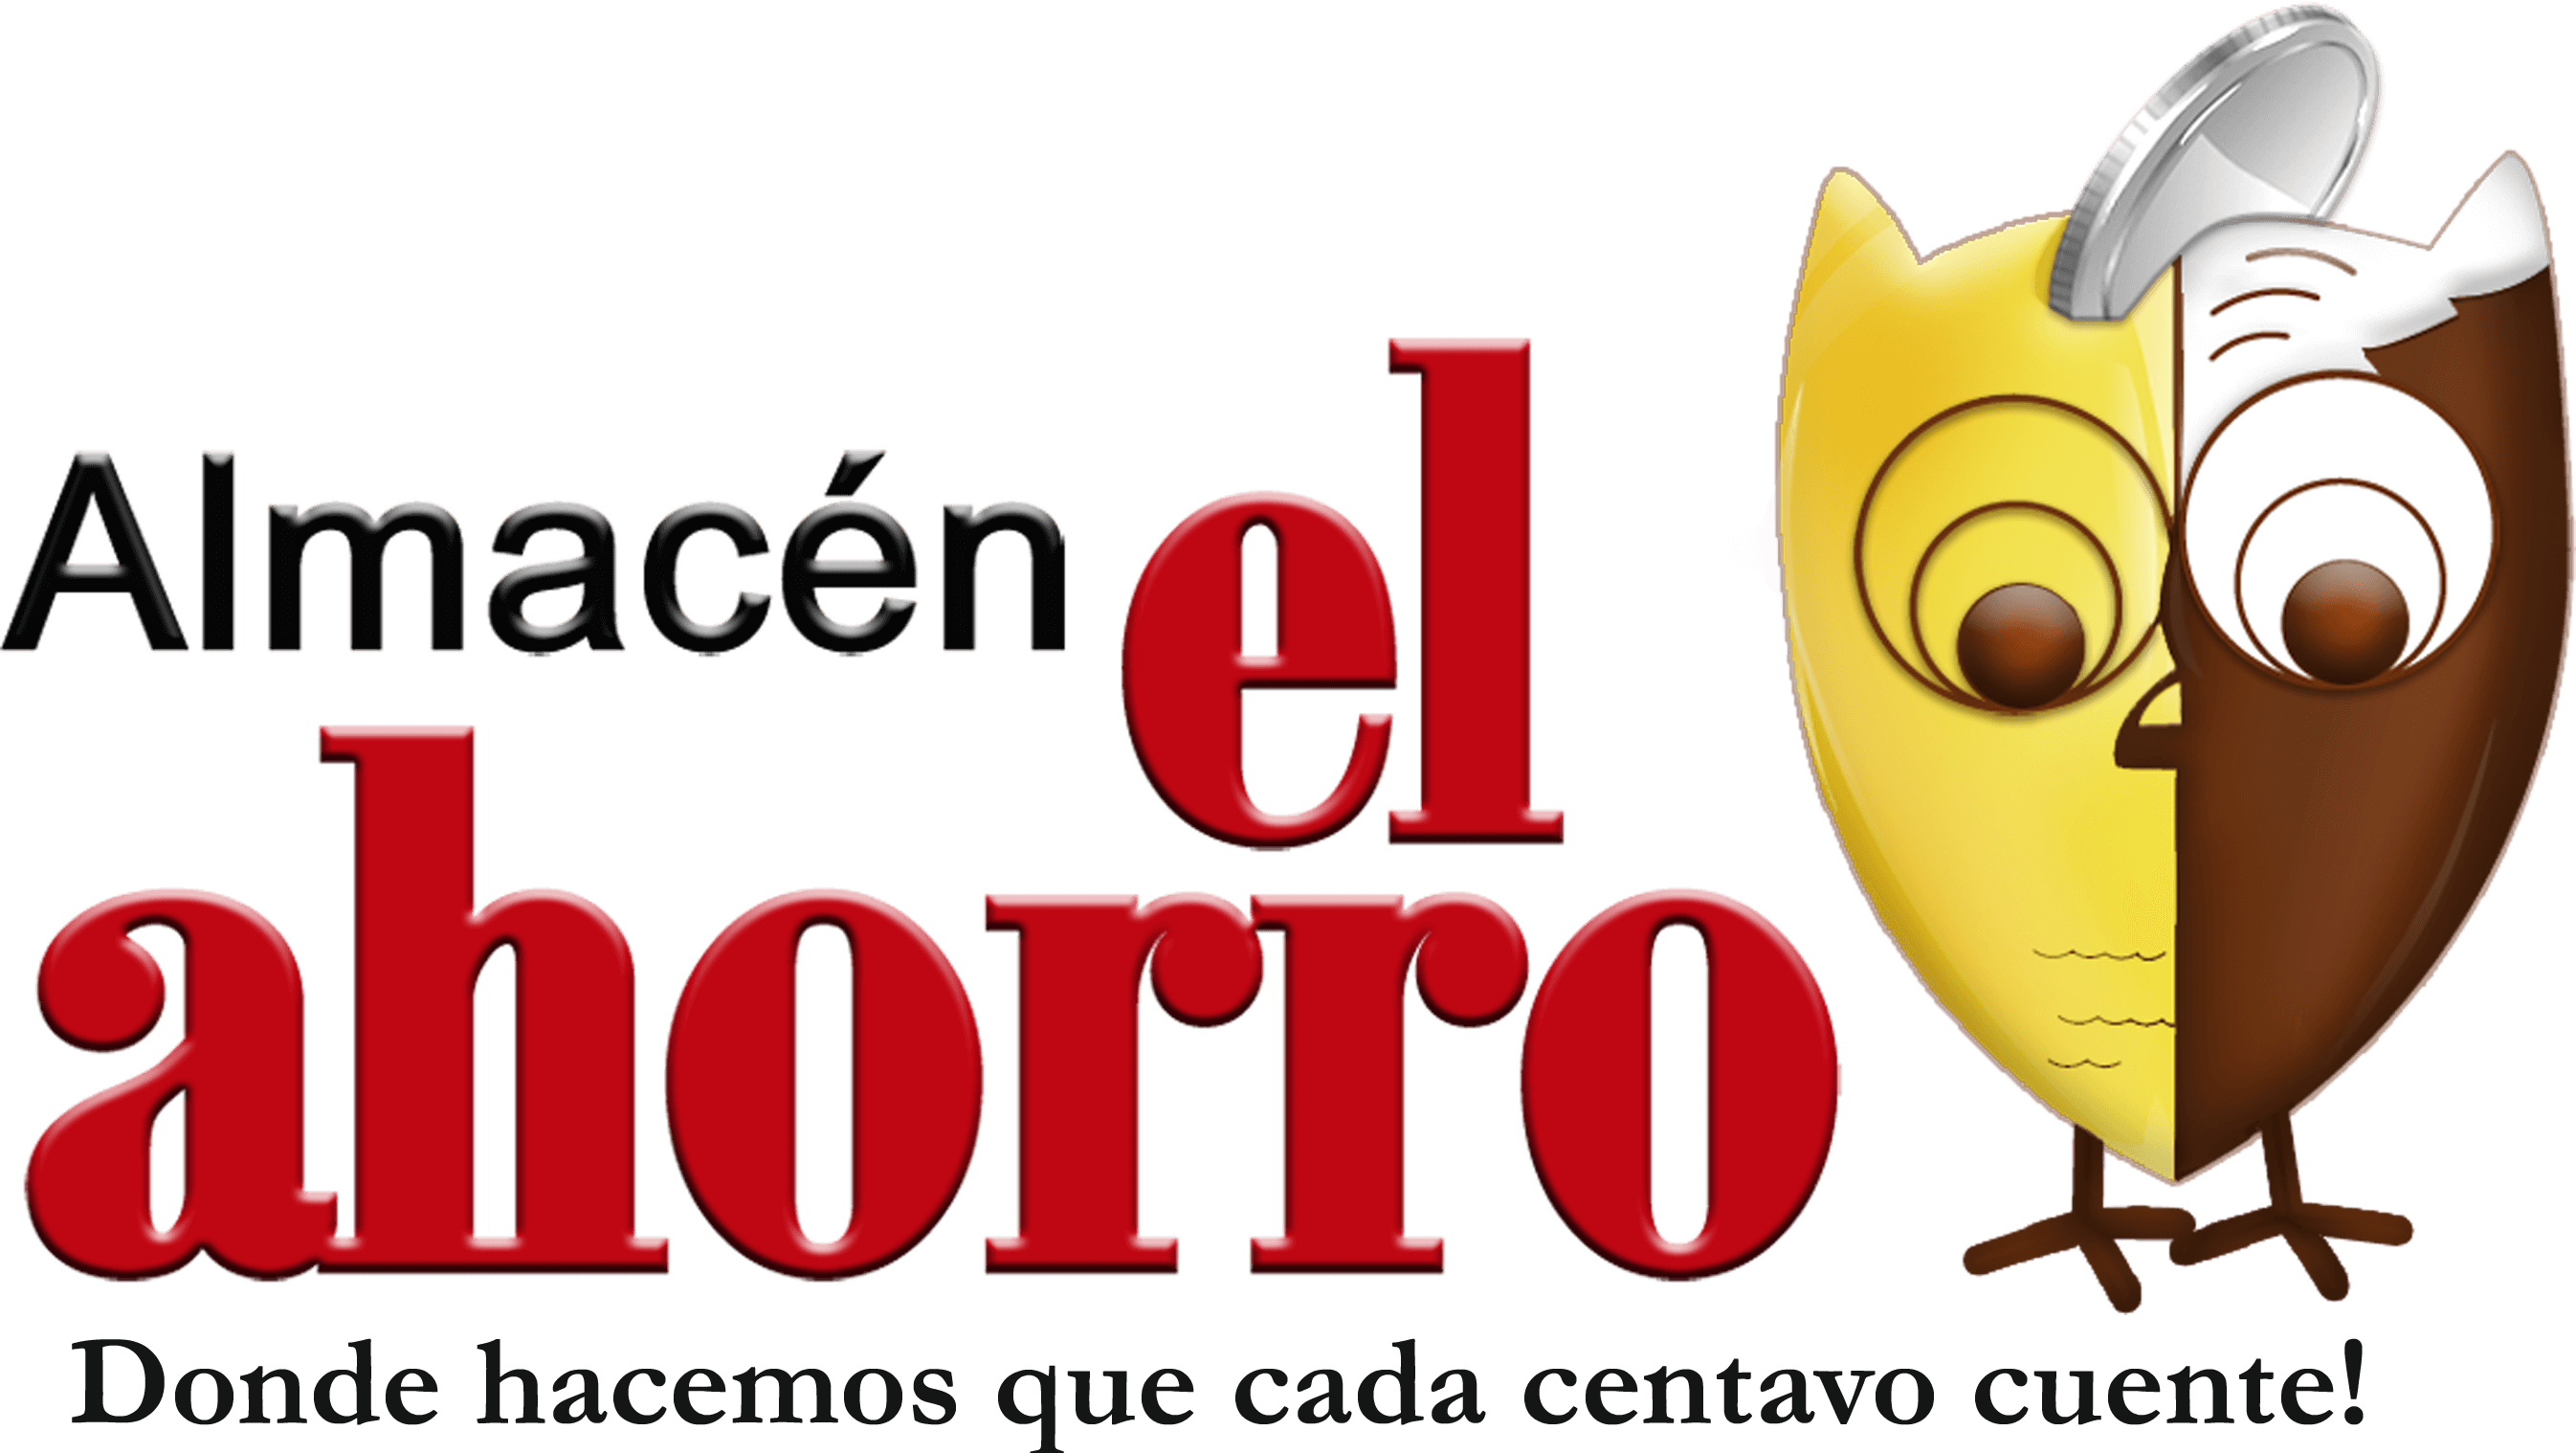 OFERTA!!! Licuadora 3 - Almacen El Ahorro (Guatemala)